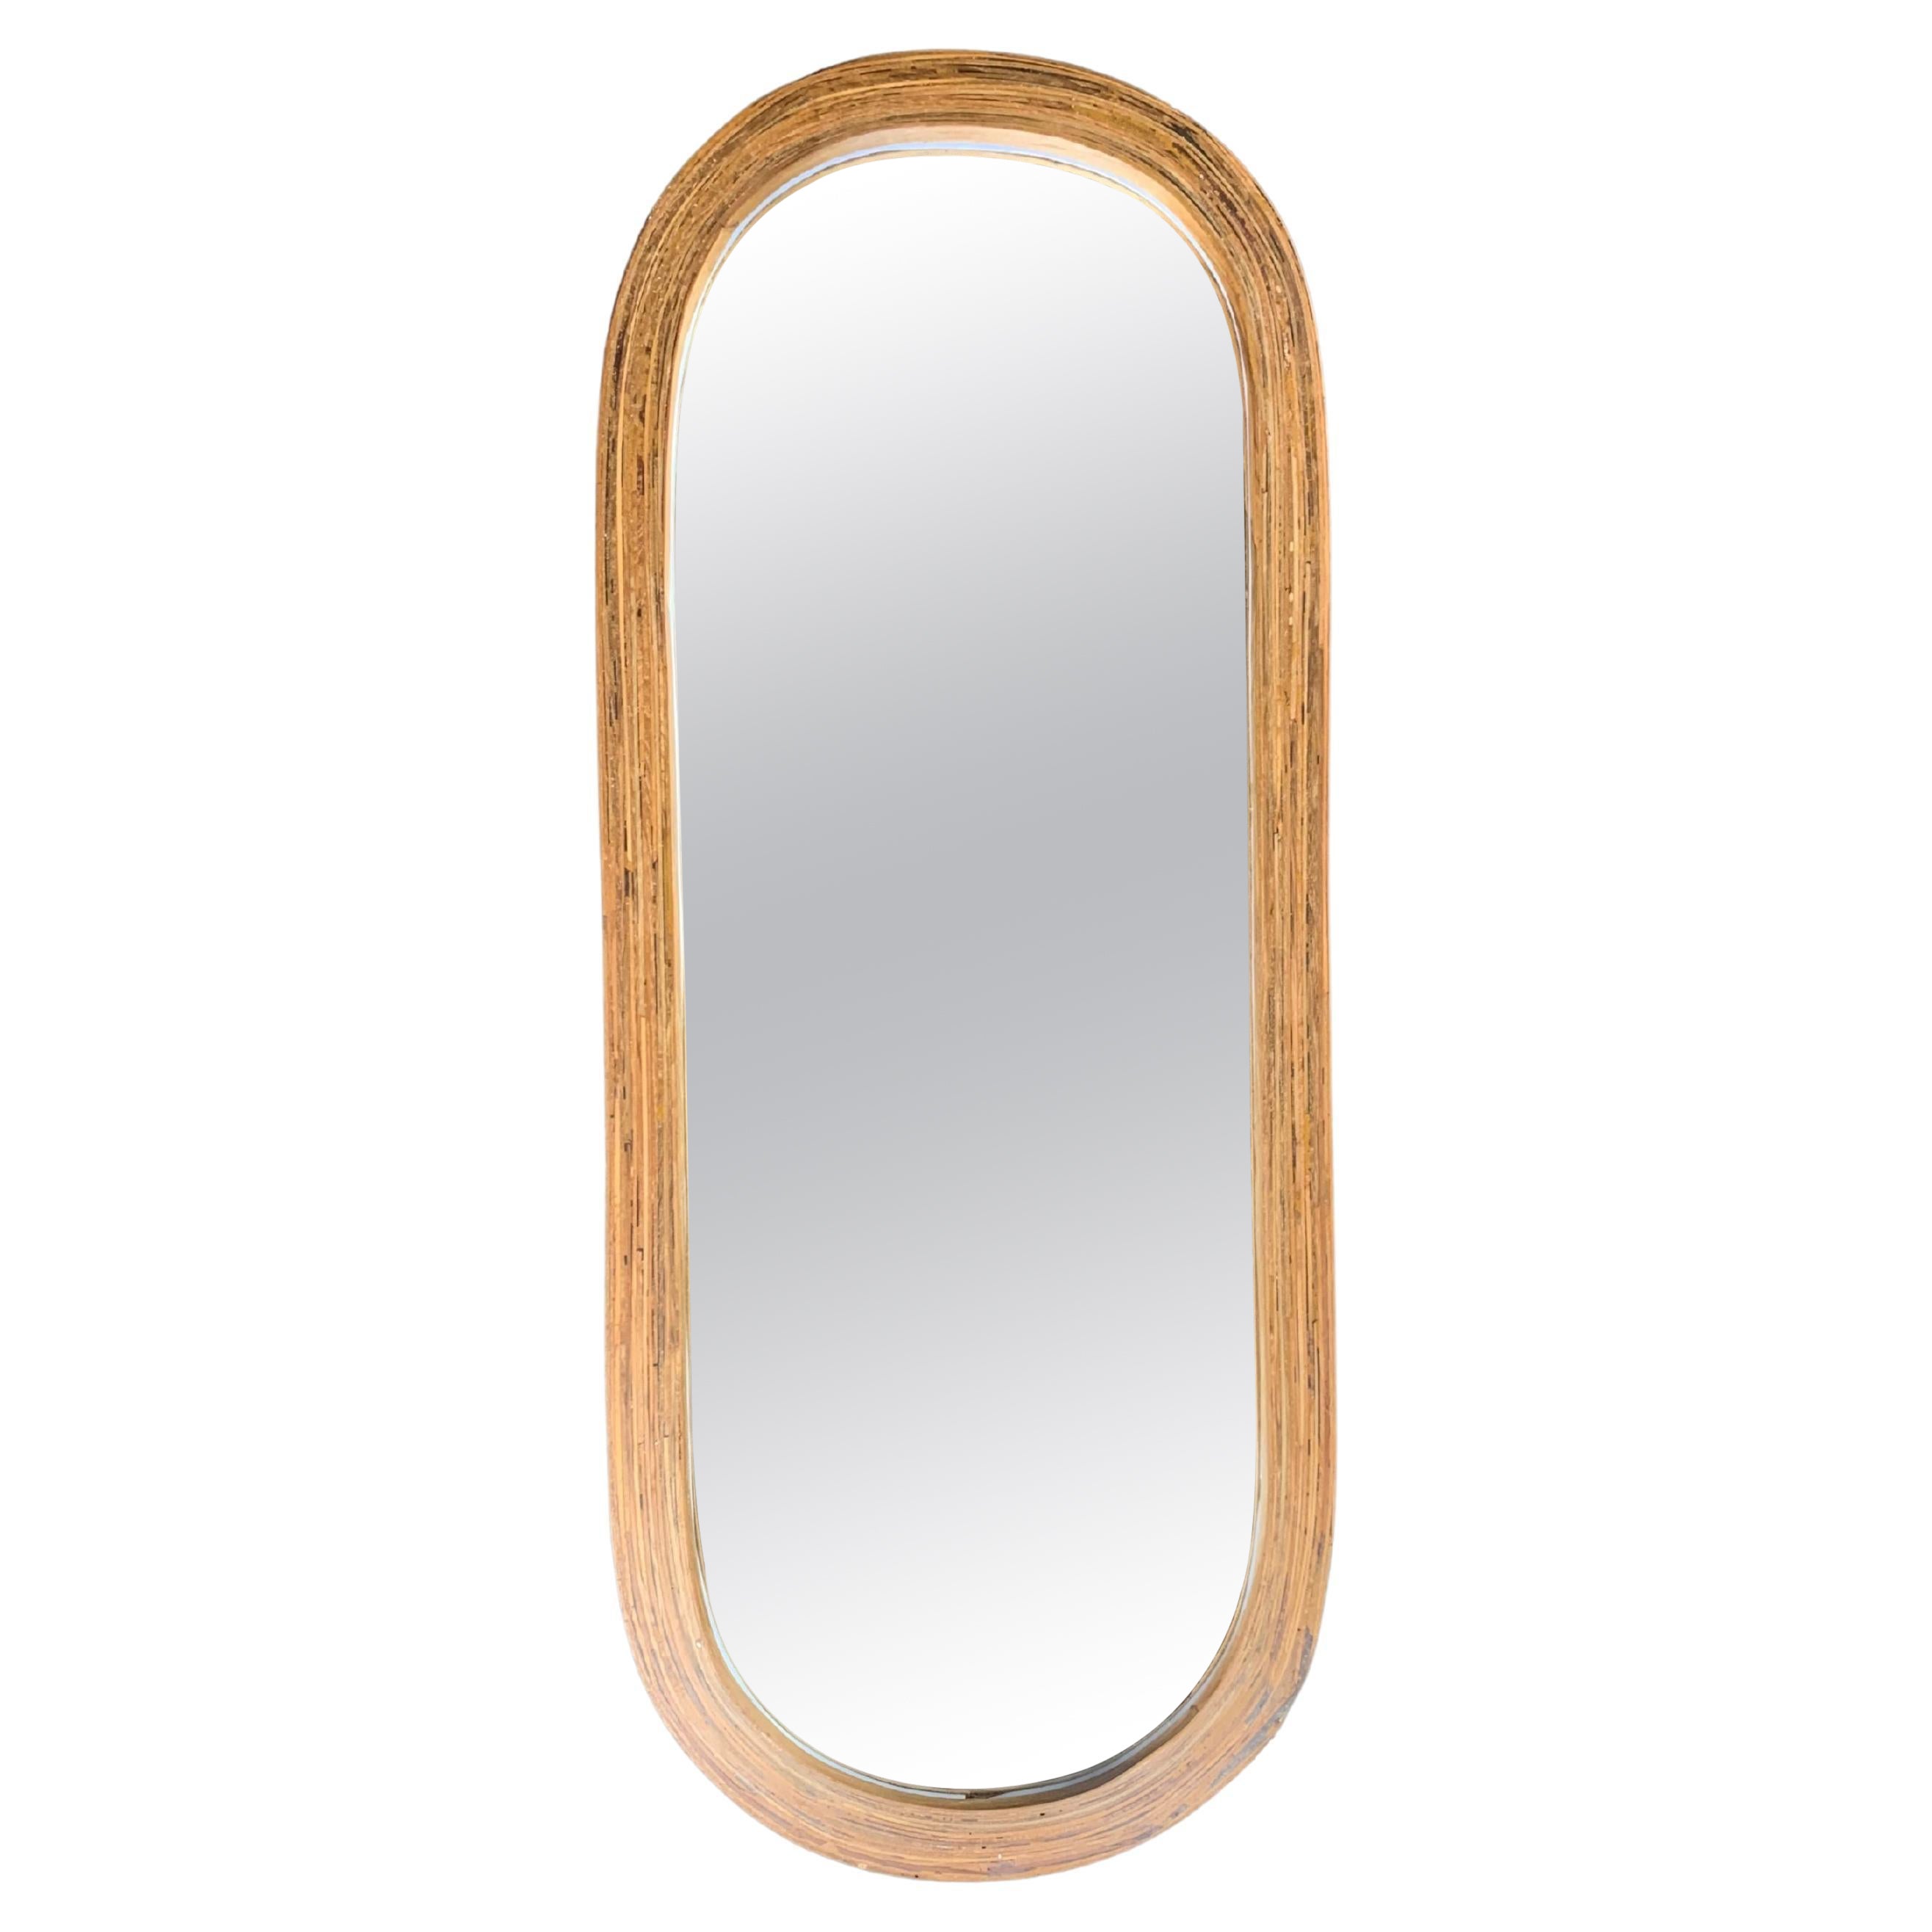 Reclaimed Teak Wood Framed Oval Mirror, Modern Organic, with Lighted Frame